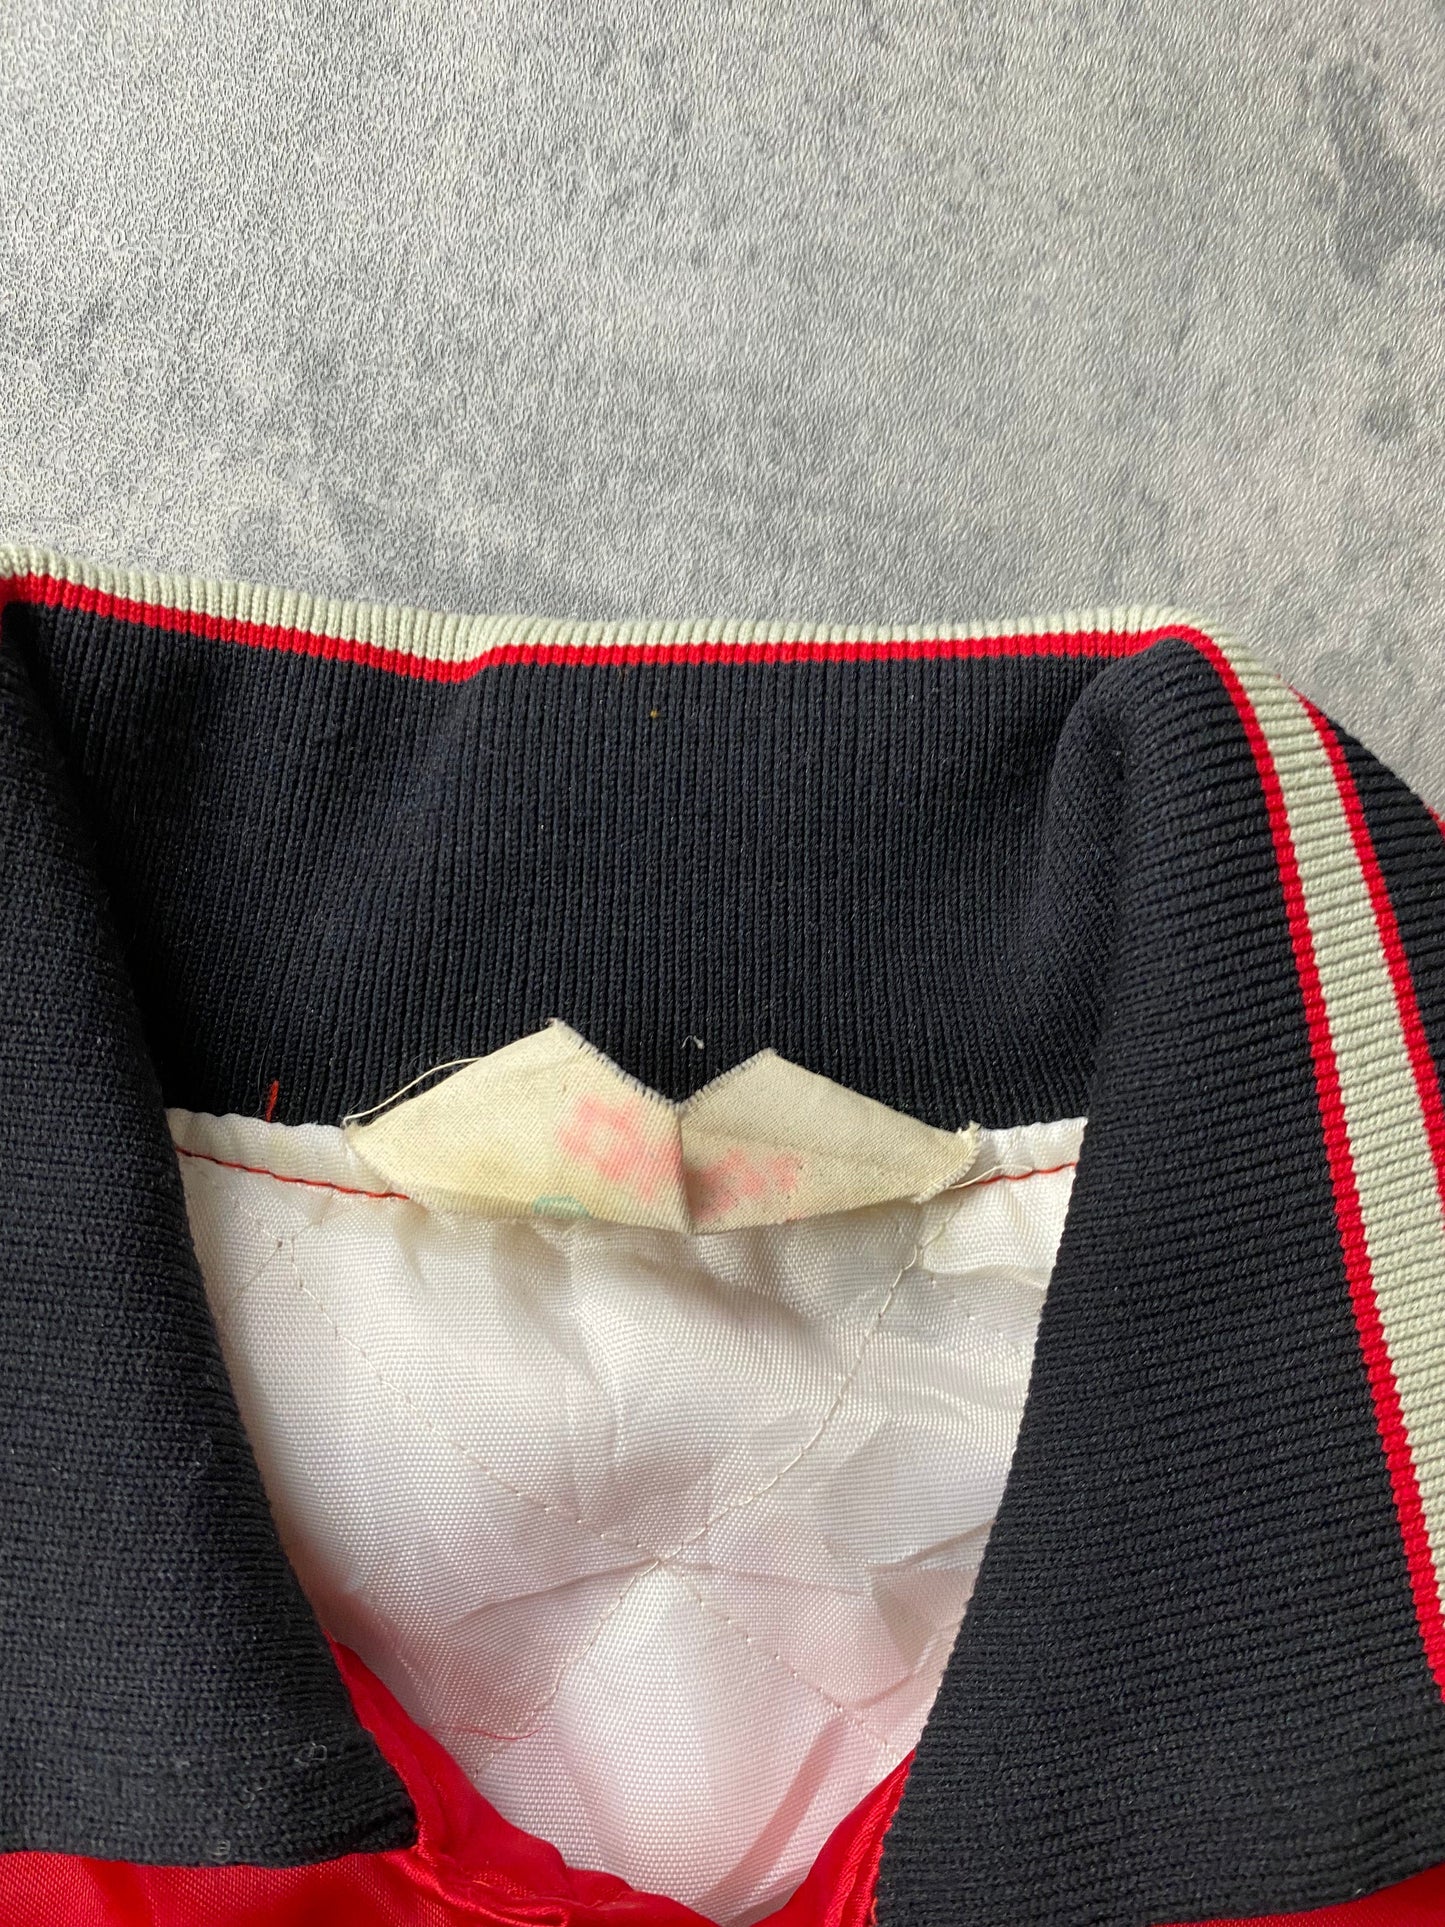 Other Jackets & Coats Vintage Fairborn Softball Jacket Mens Medium Red Satin Snap On Coat